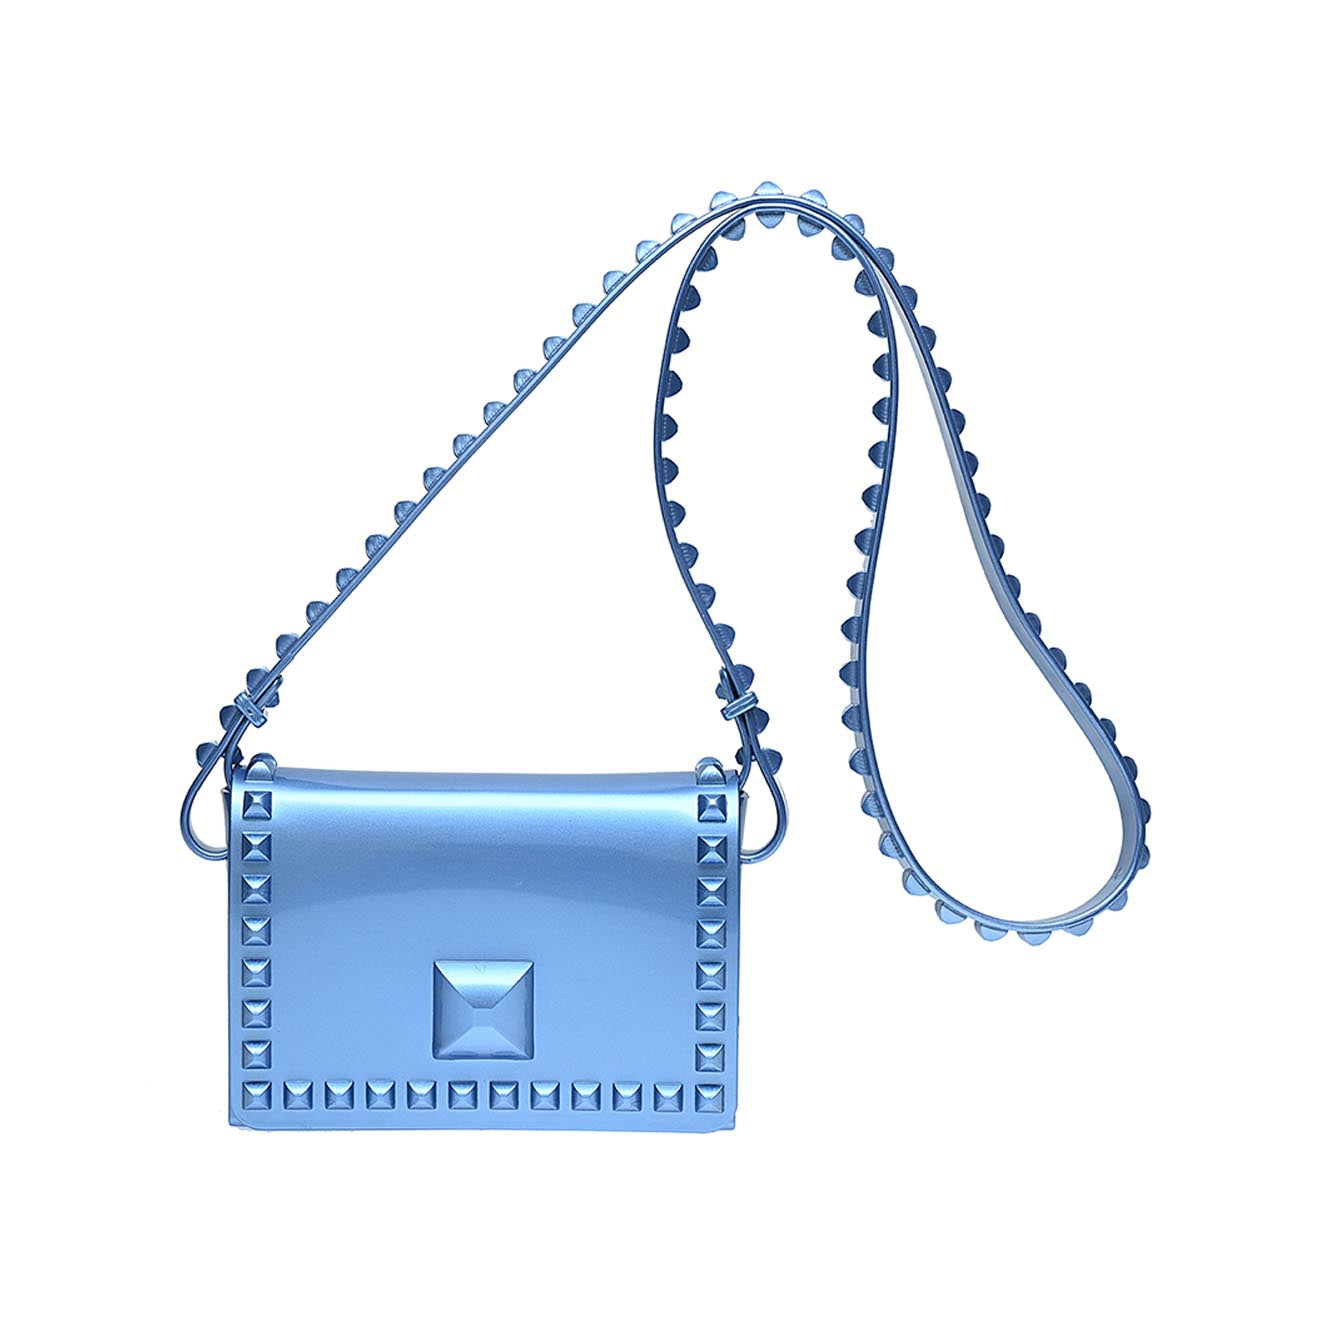 Blue metallic mini shoulder bag, mini crossbody bag for women from Carmen Sol, made in Italy.